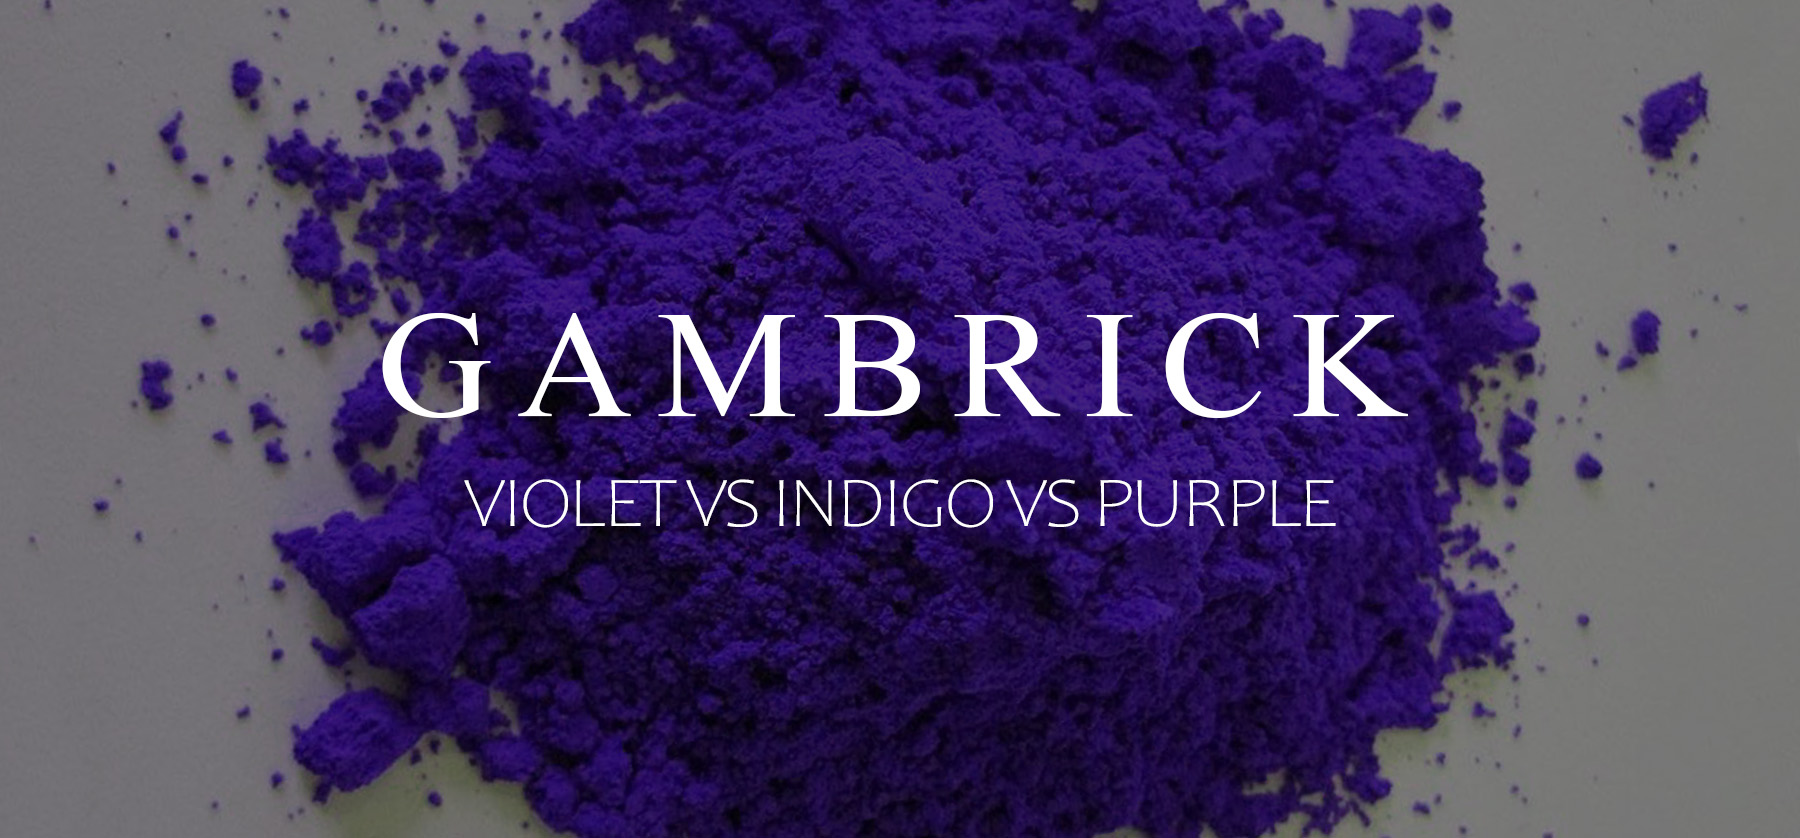 violet vs indigo vs purple banner 1.0